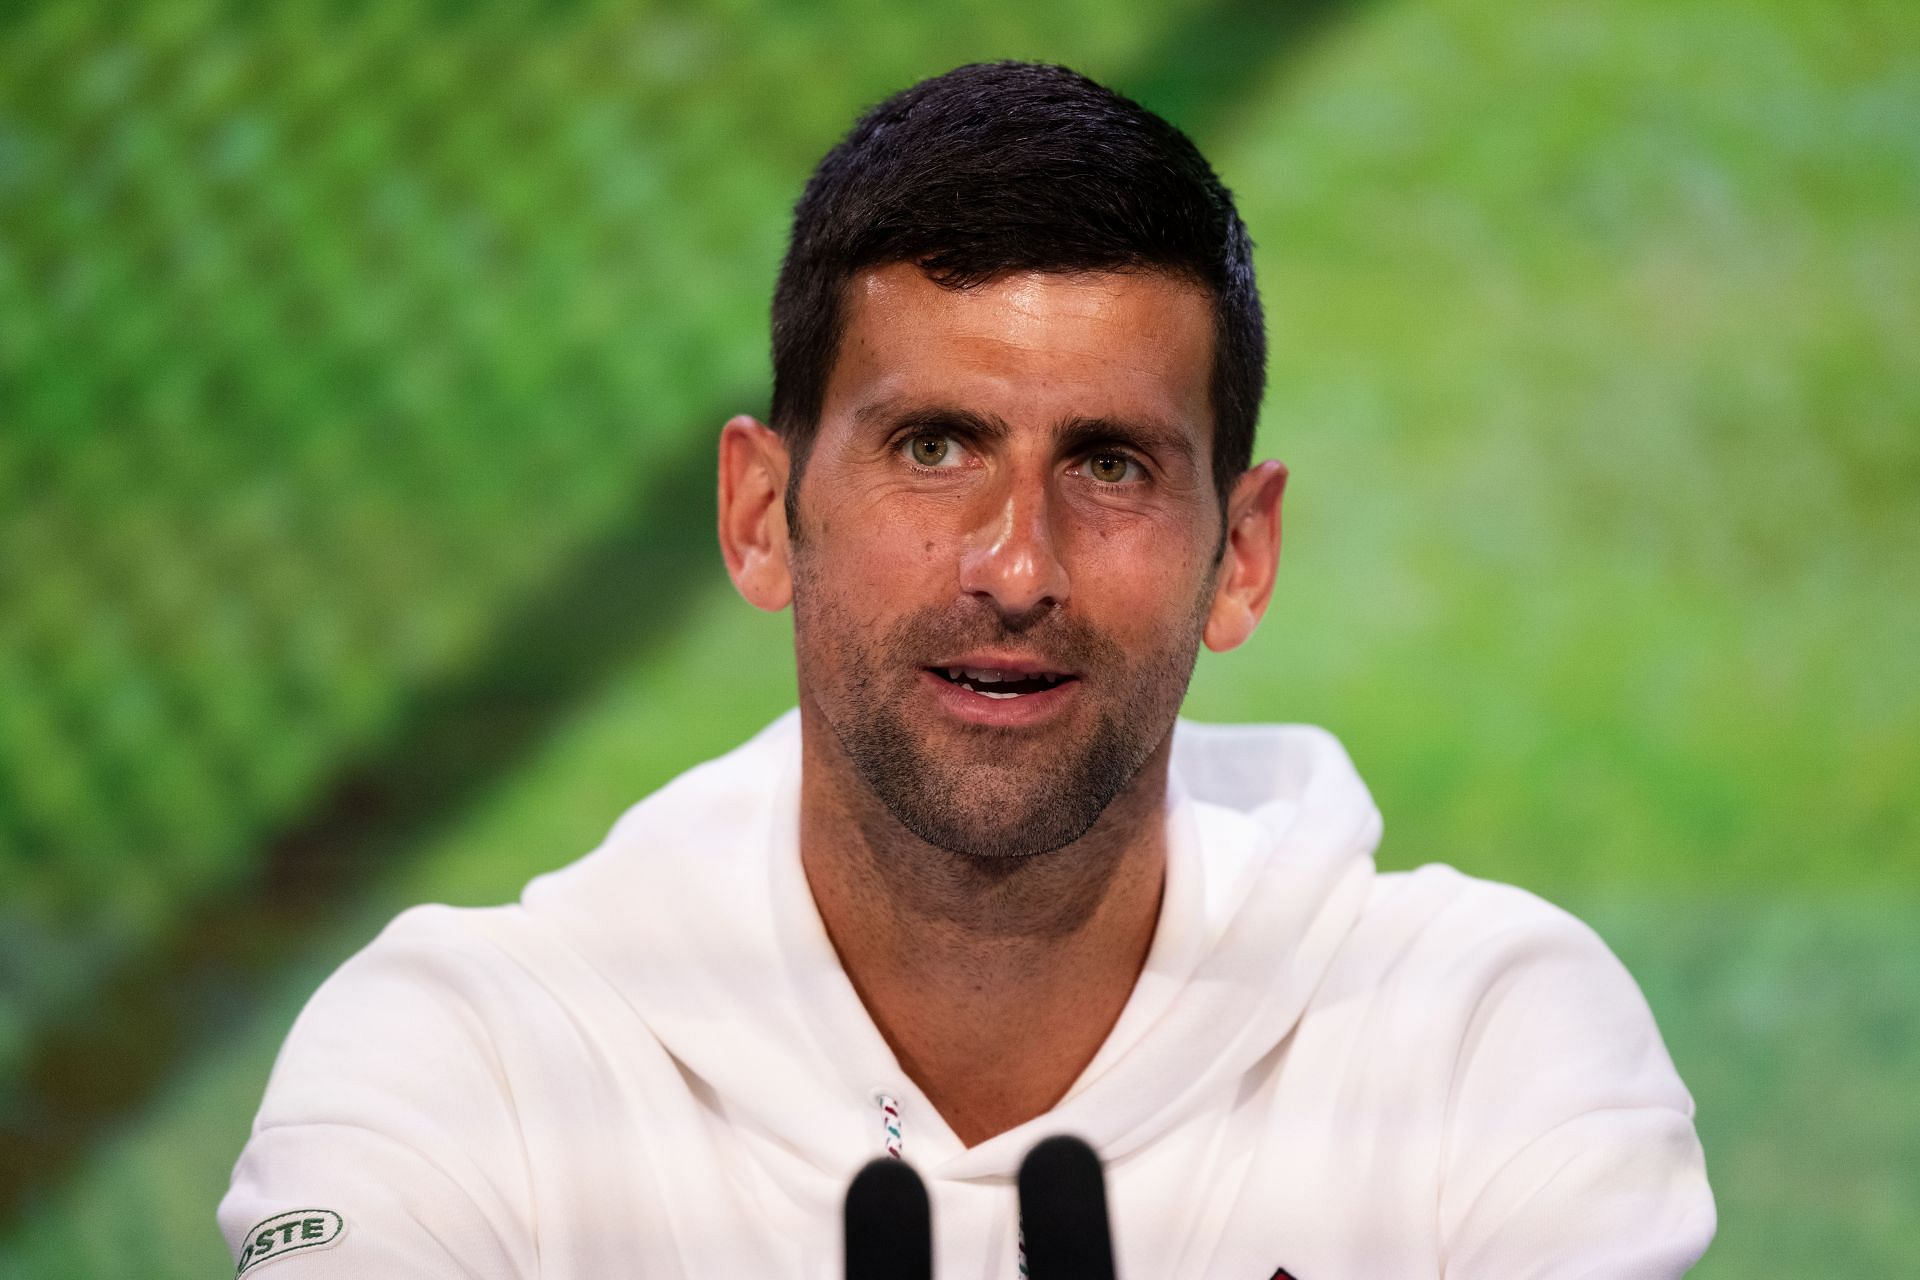 Previews: The Championships - Novak Djokovic at Wimbledon 2023